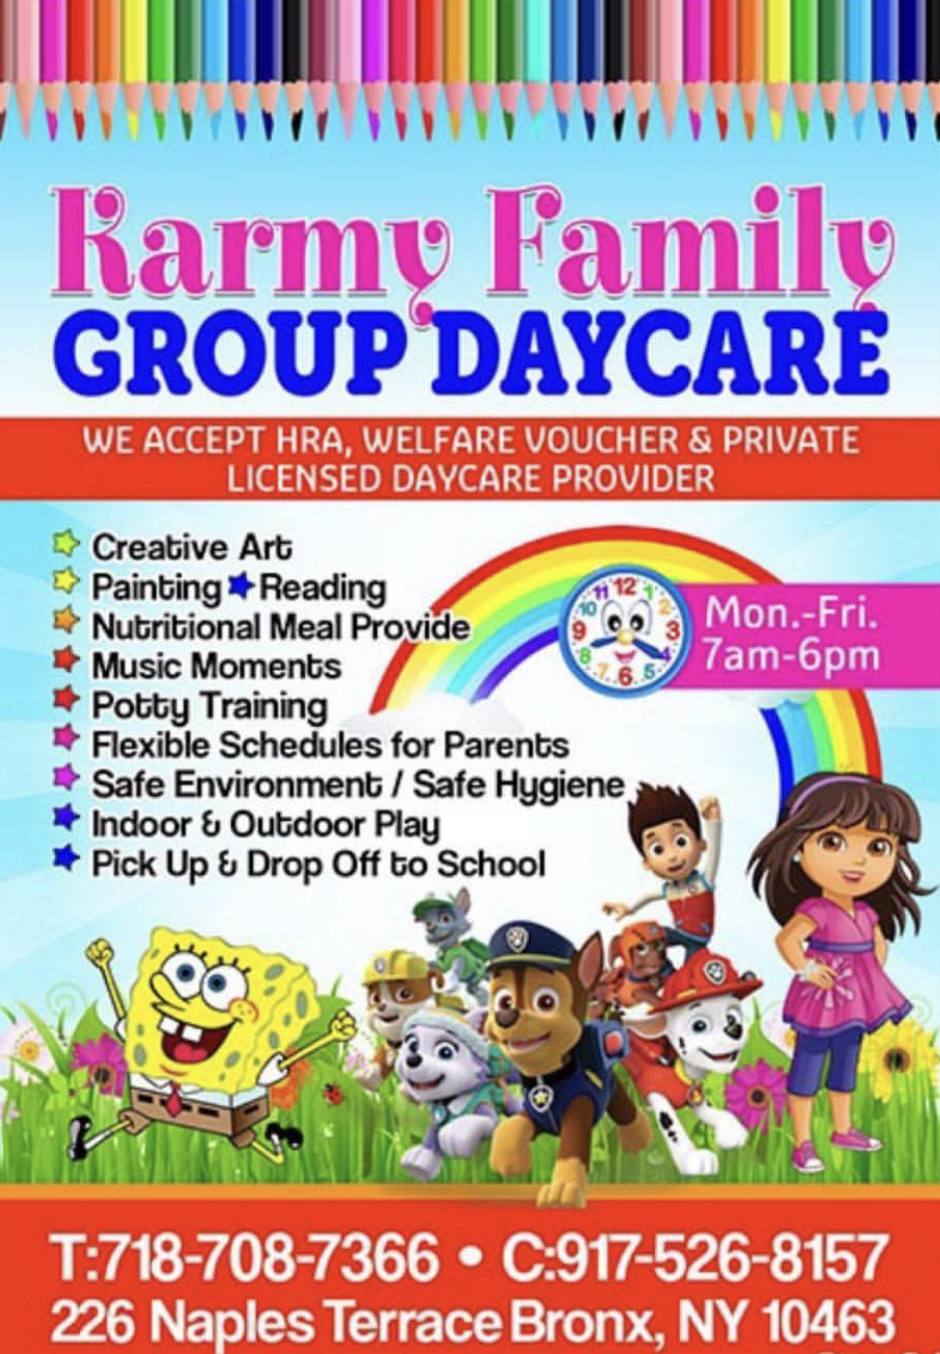 Karmy Family Group Daycare Logo